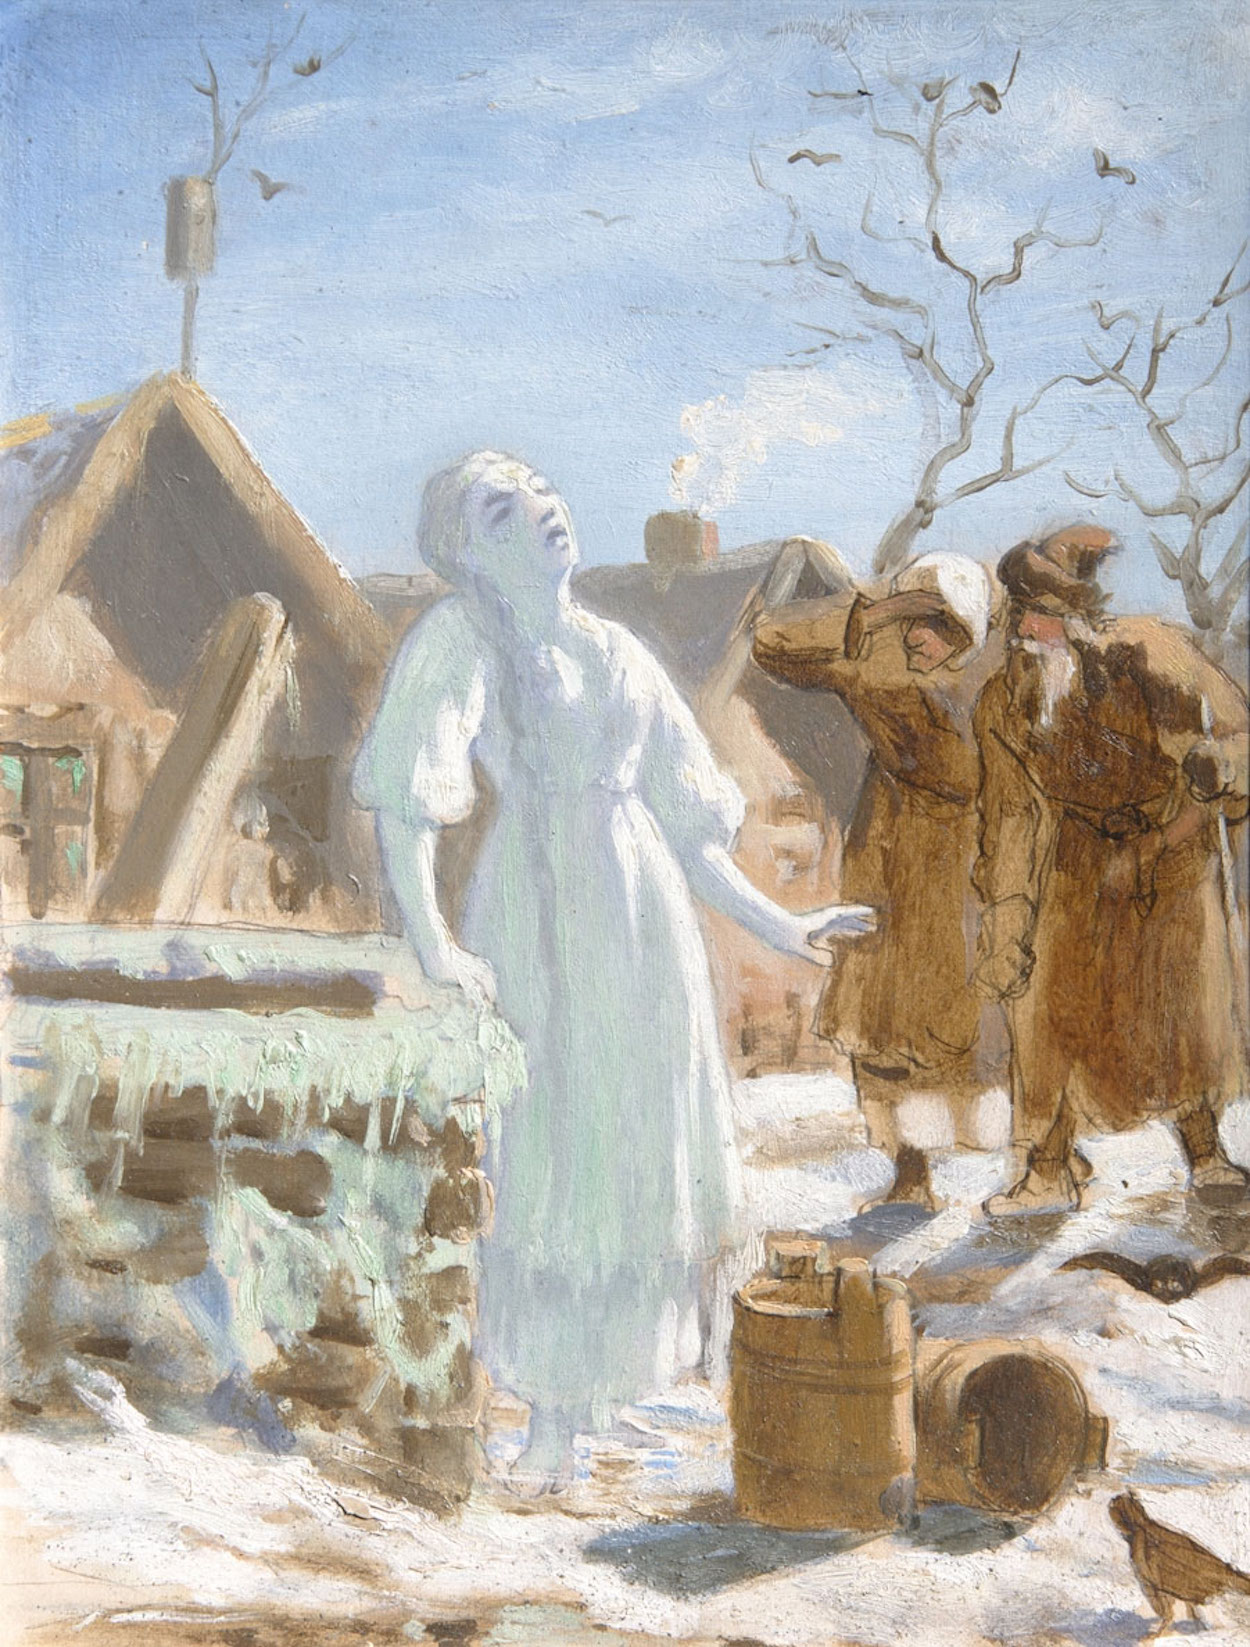 The Snow Maiden by Vasily Grigoryevich Perov - 1879 Tretyakov Gallery